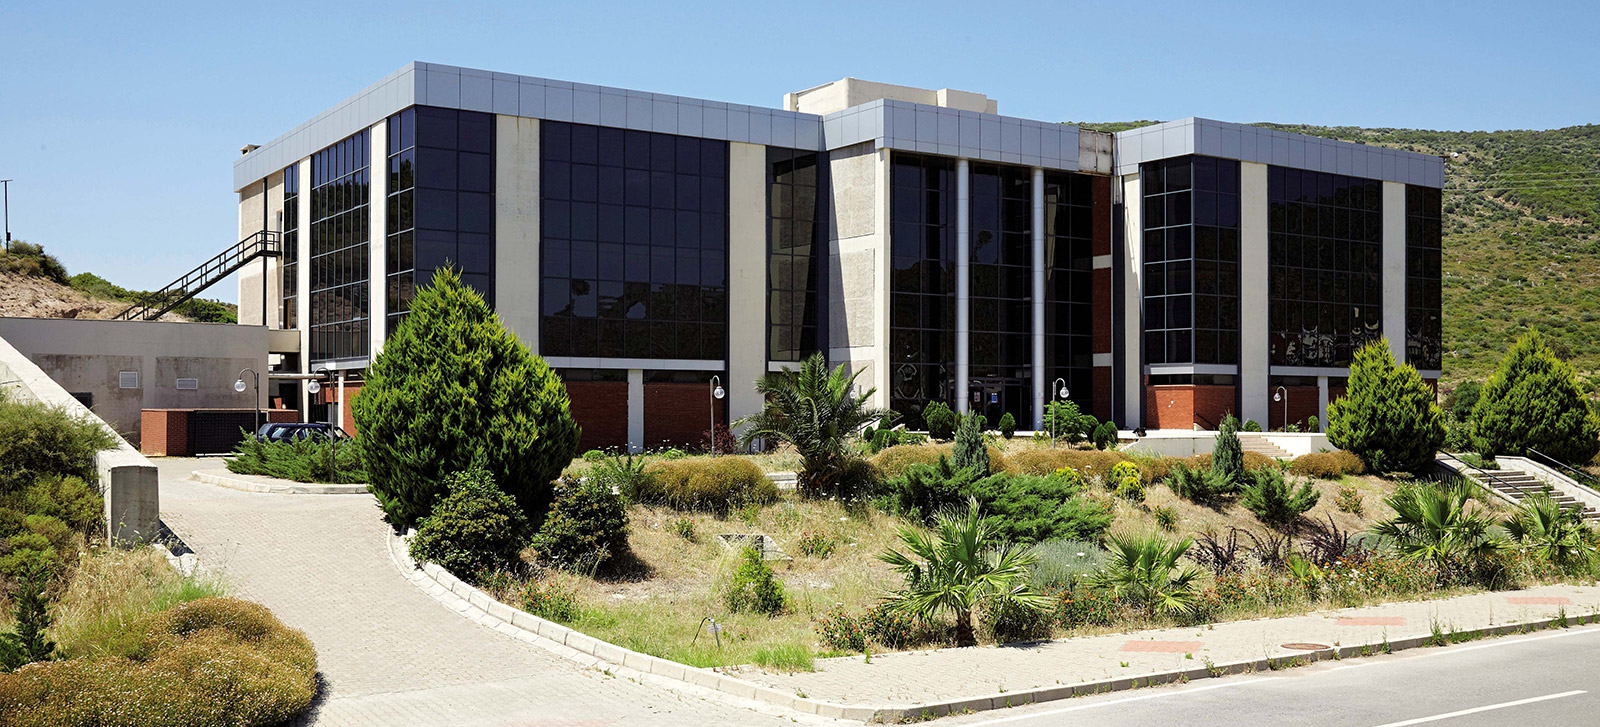 izmiryuksek universitesi find and study 5 - İL'Institut de technologie d'Izmir